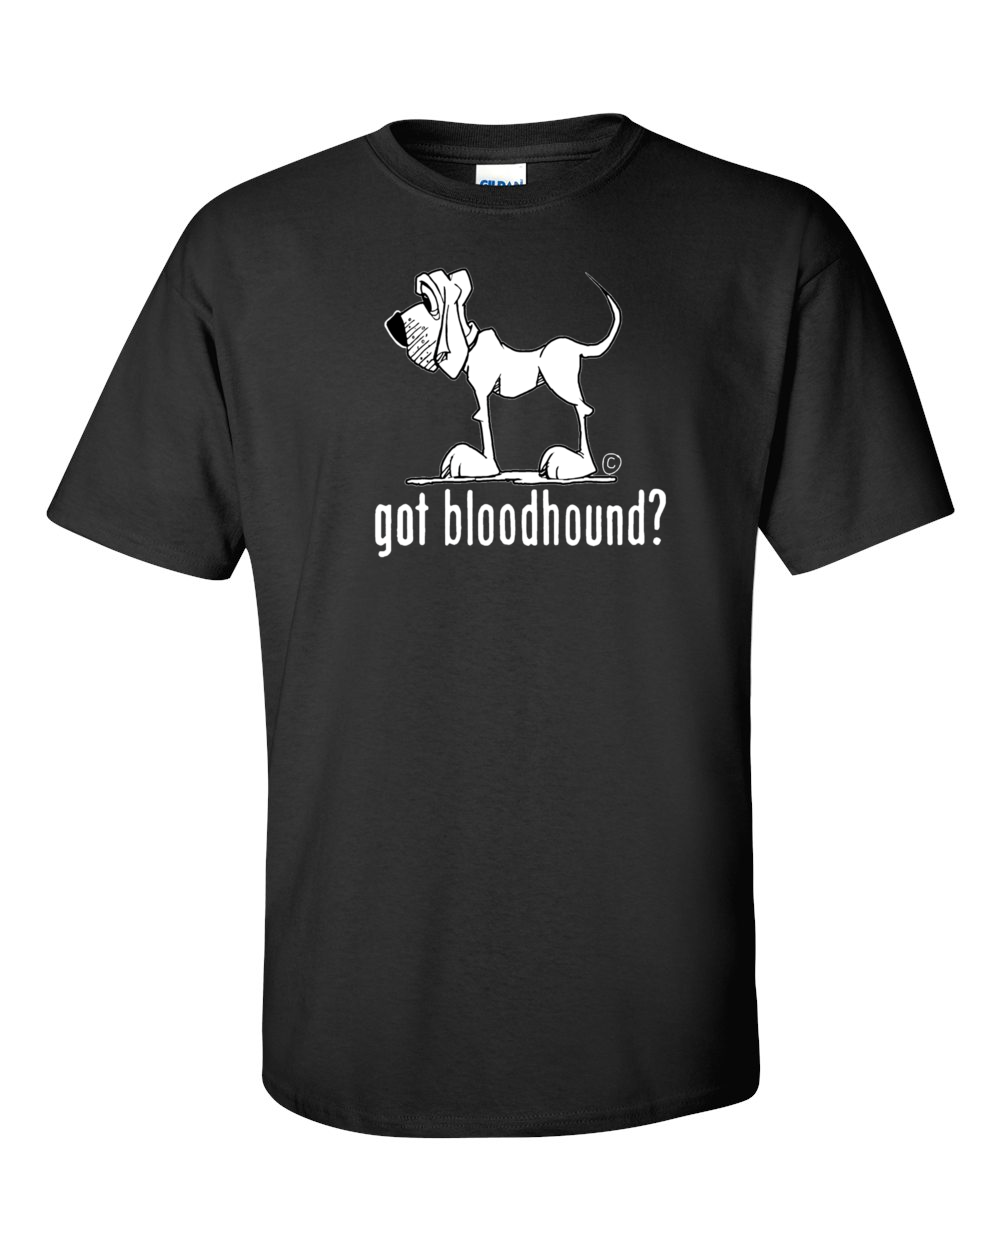 Shirt Designs The Bloodhound Shop